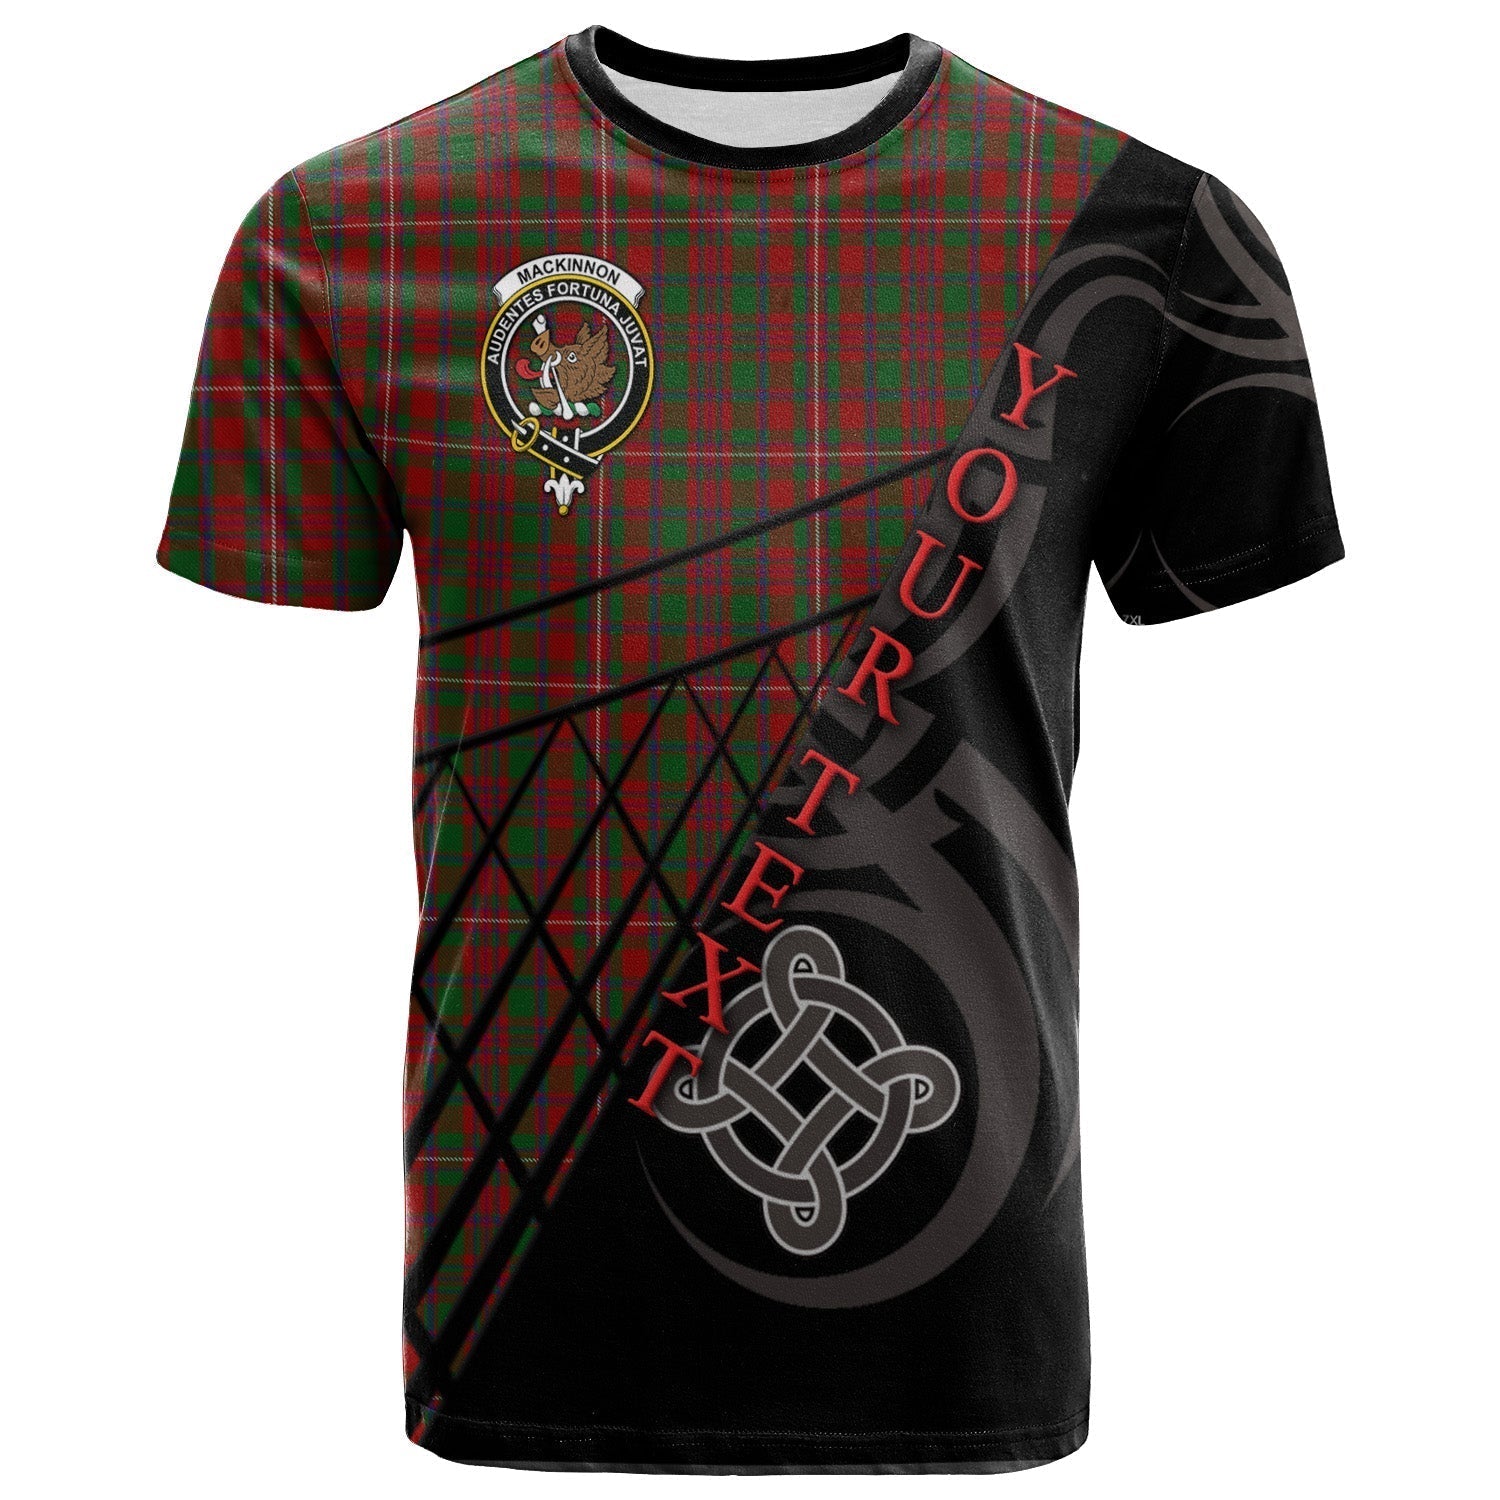 scottish-mackinnon-07-clan-crest-tartan-pattern-celtic-t-shirt